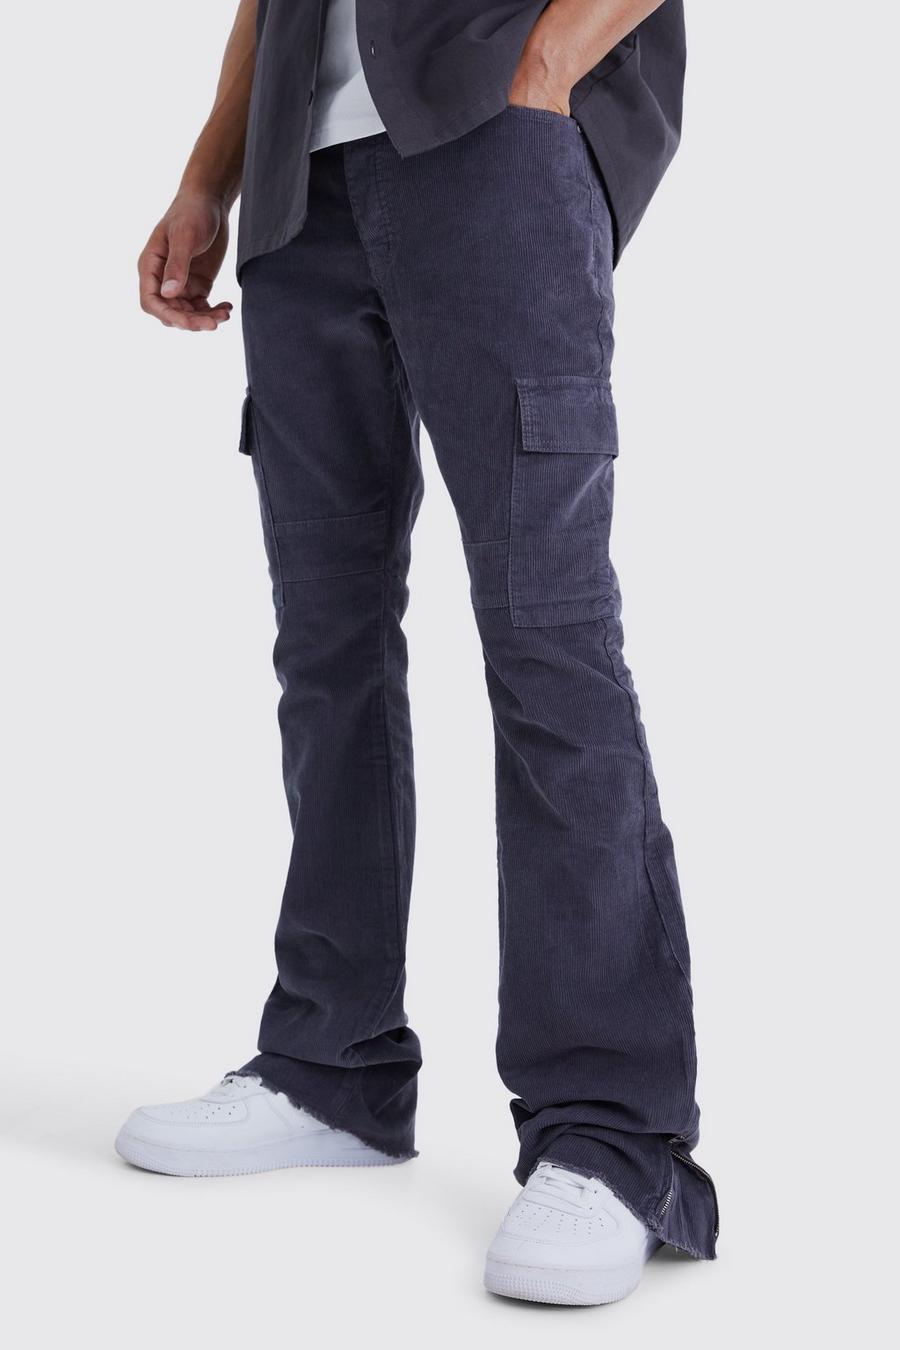 Tall - Pantalon cargo zippé taille fixe, Charcoal